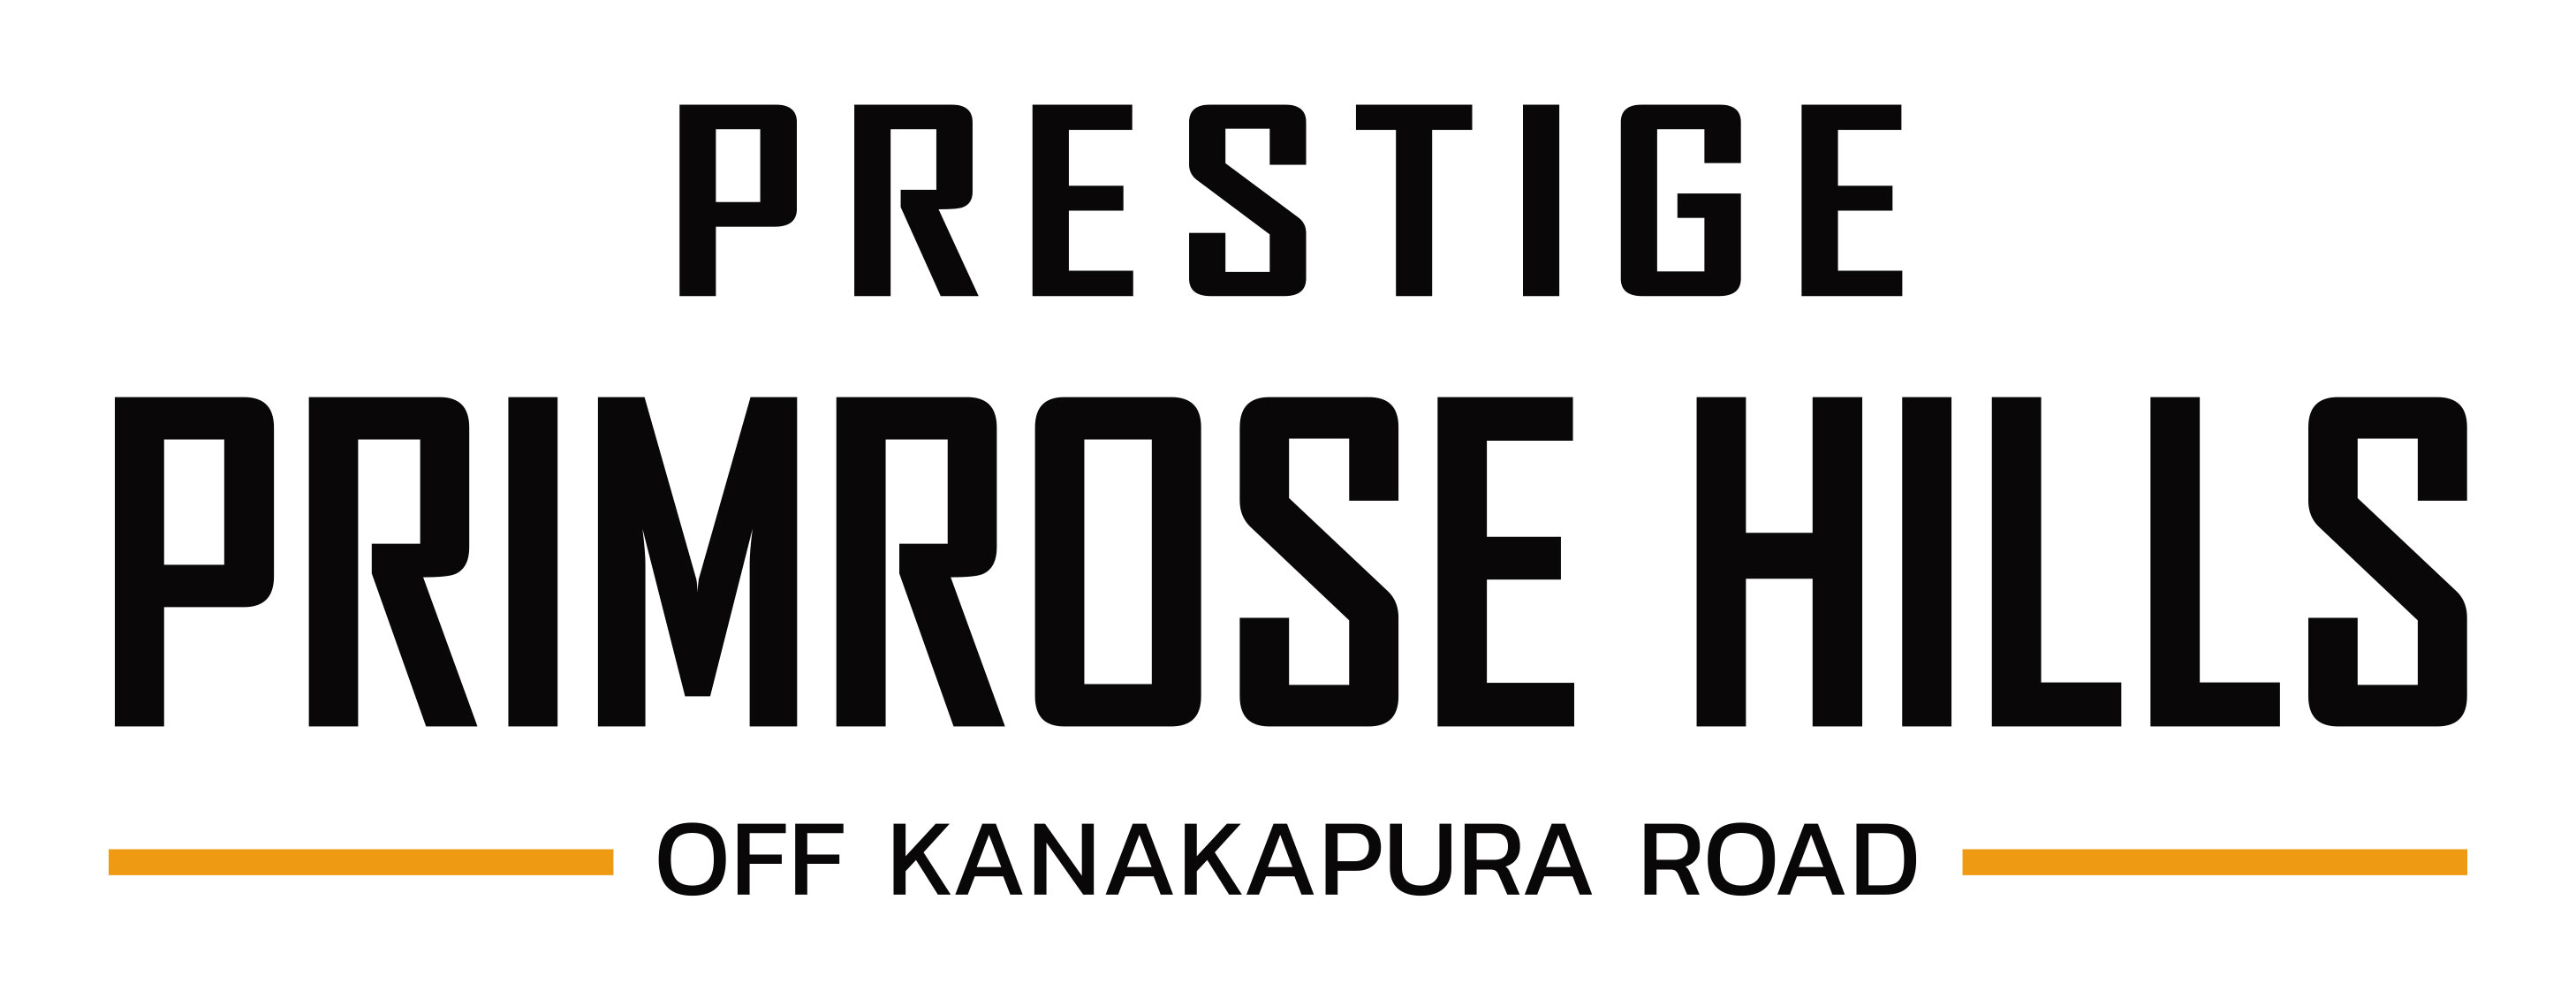 Prestige Primrose Hills Logo